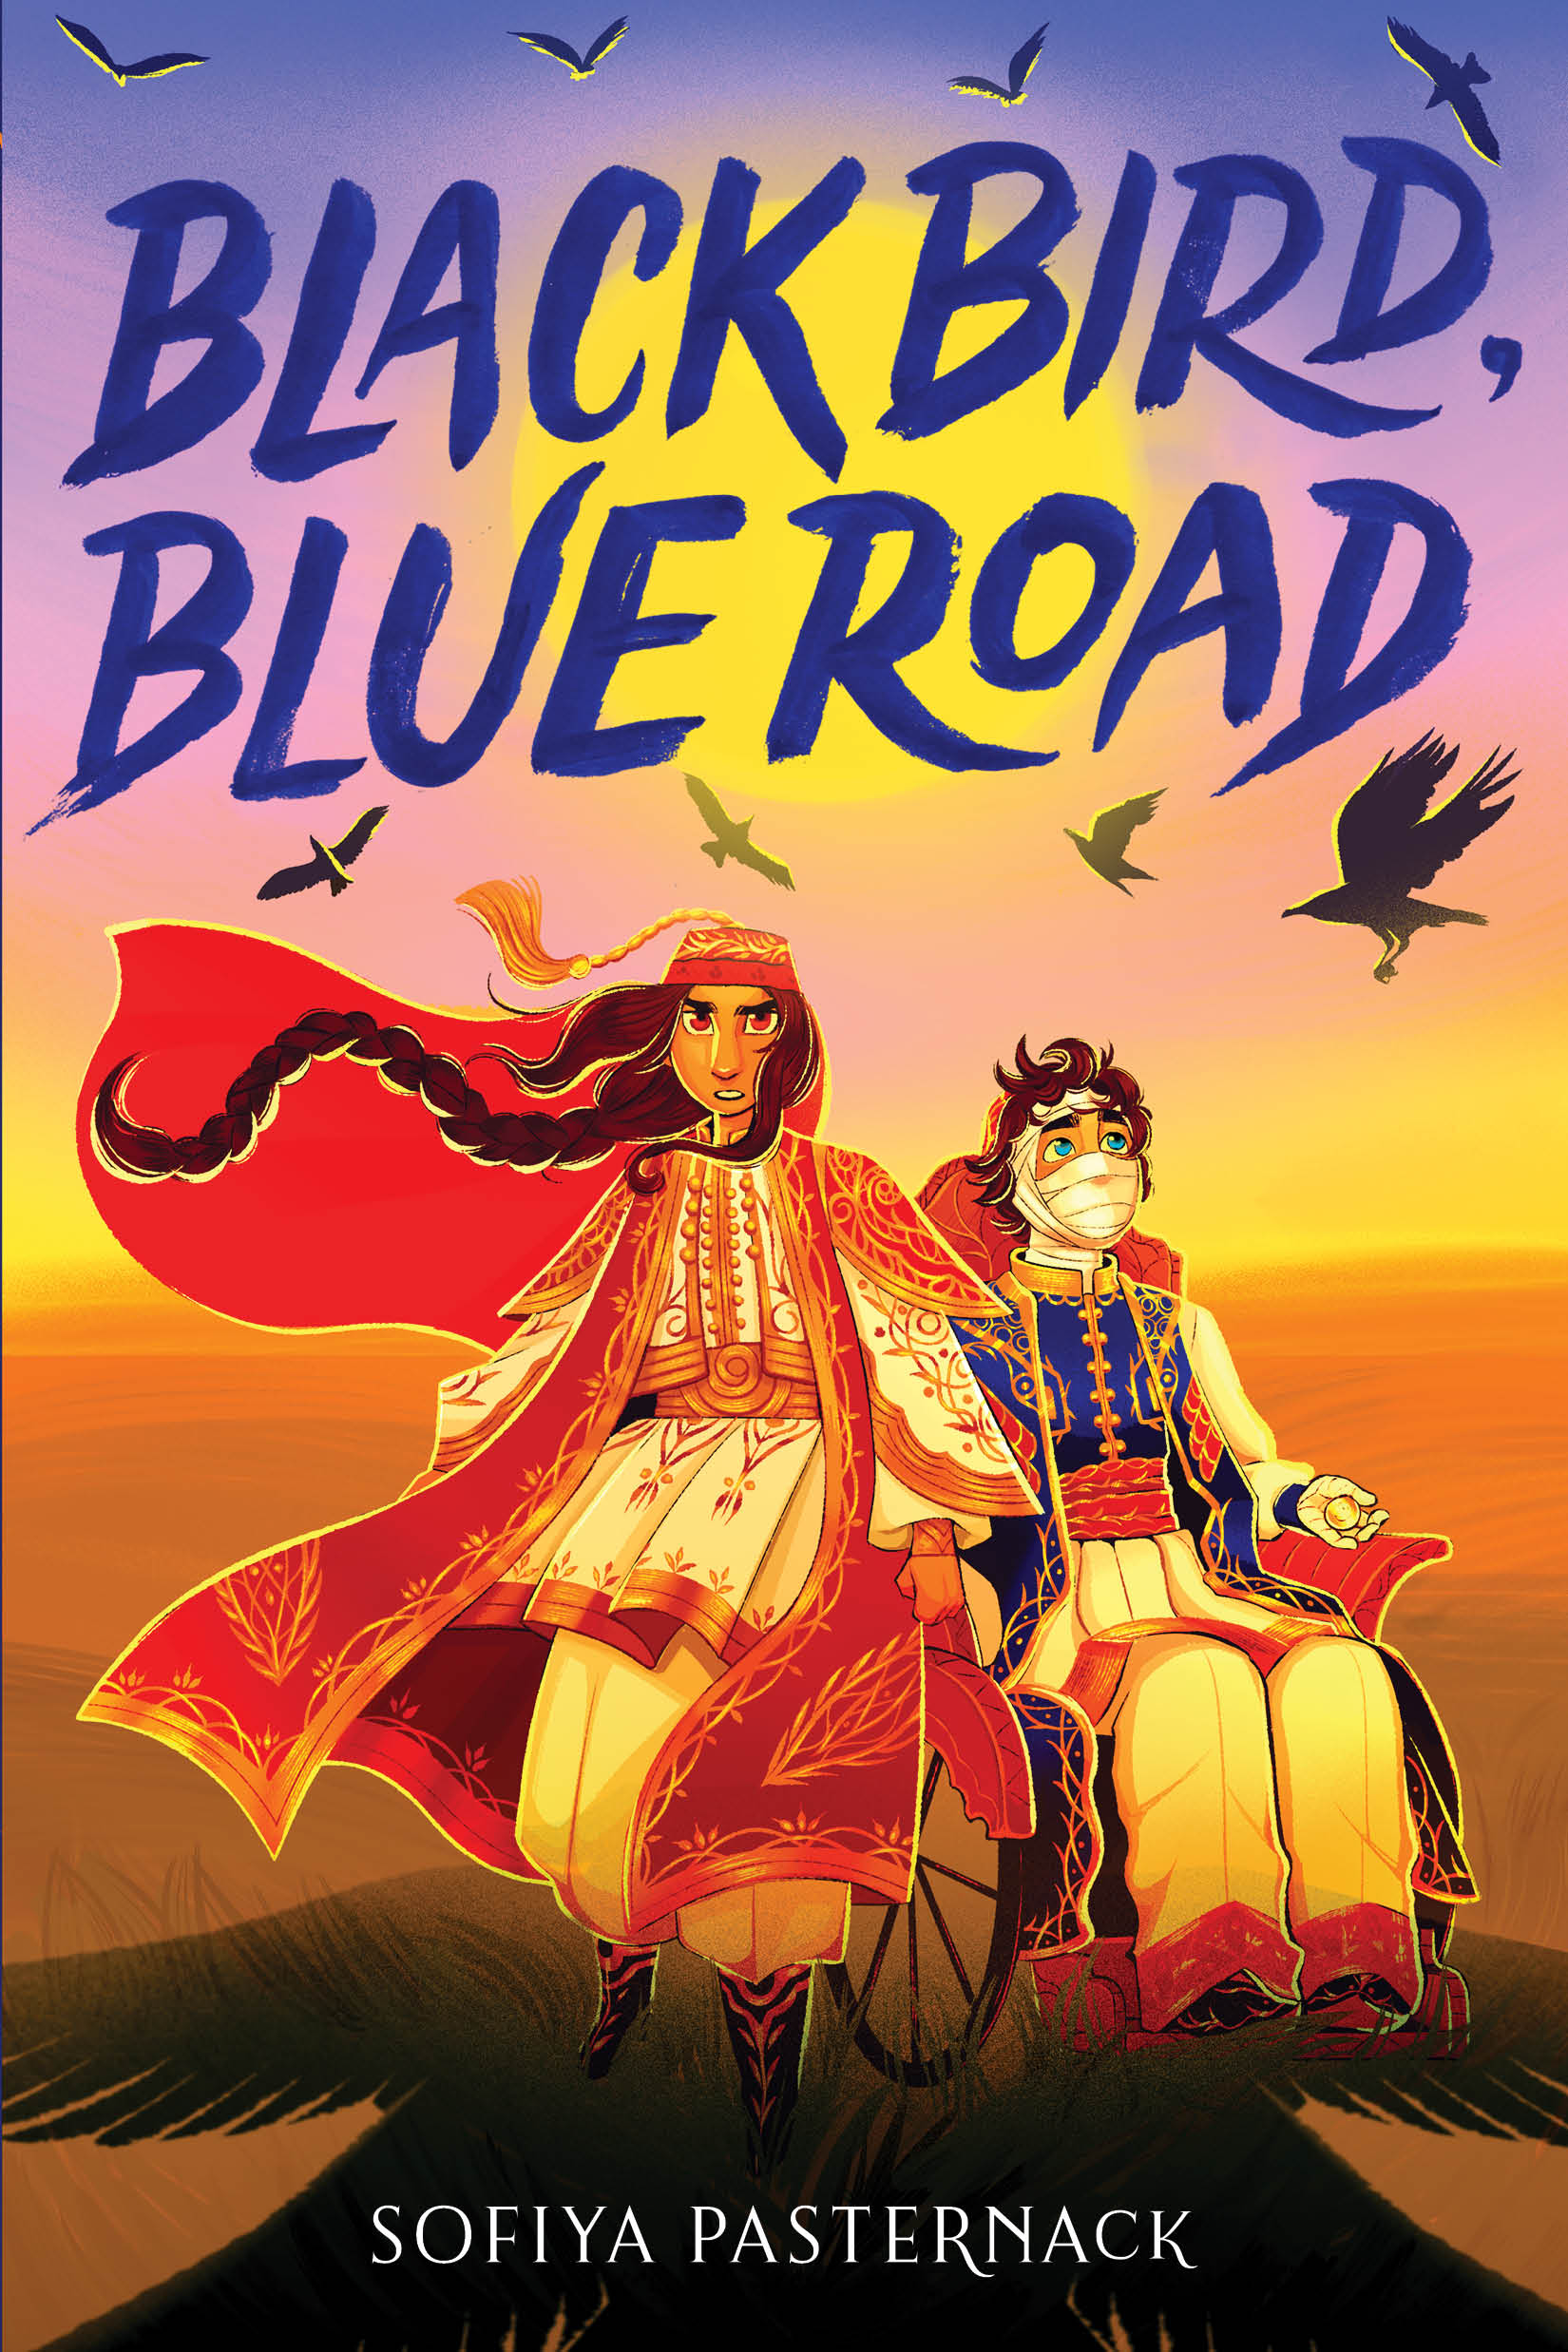 Image for "Black Bird, Blue Road"